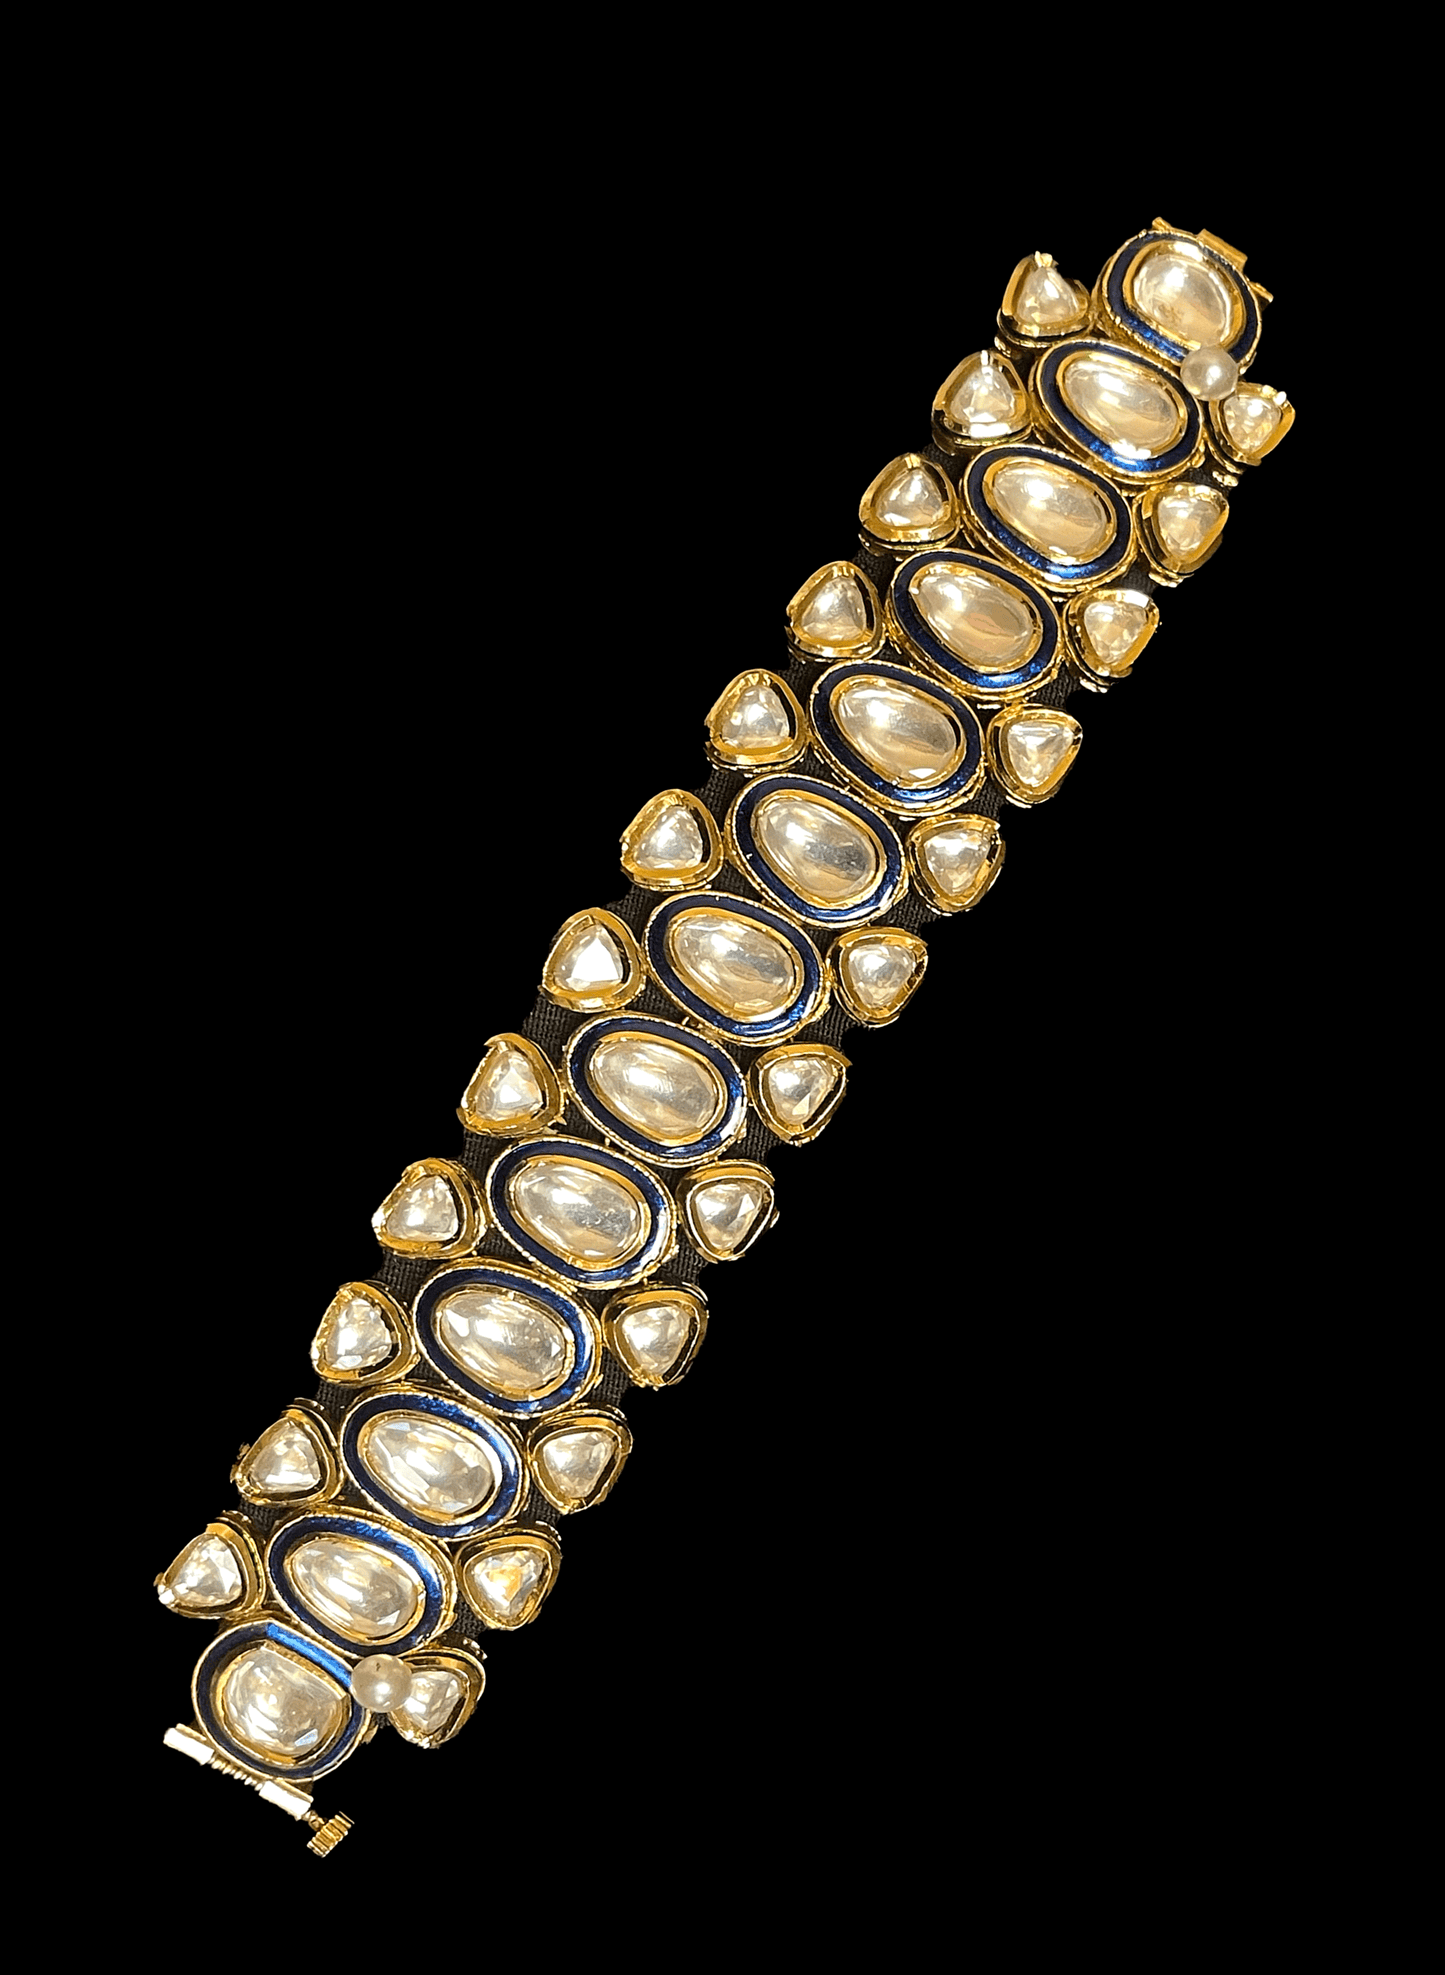 Load image into Gallery viewer, Meenakari jewelry with Kundan stone setting - Indian bridal bracelet
